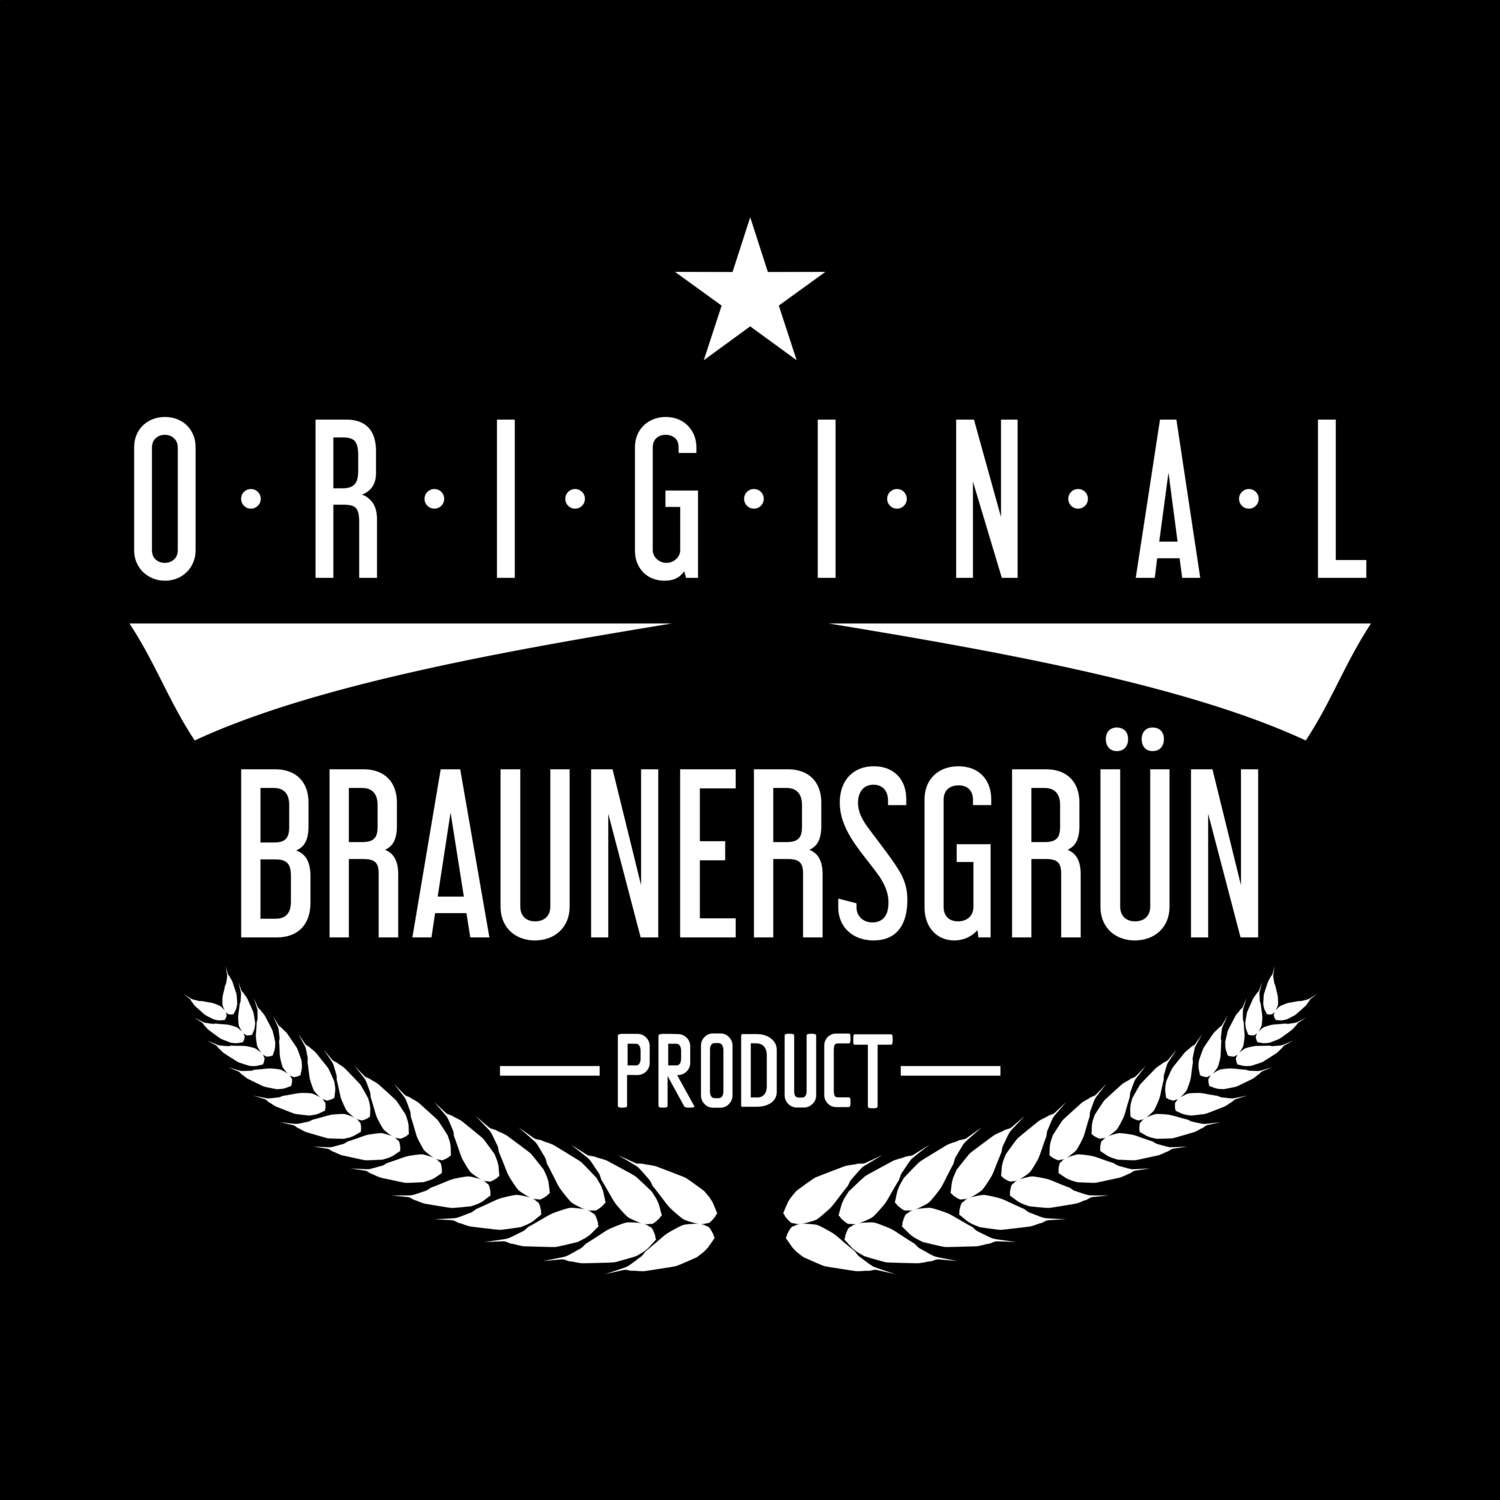 Braunersgrün T-Shirt »Original Product«